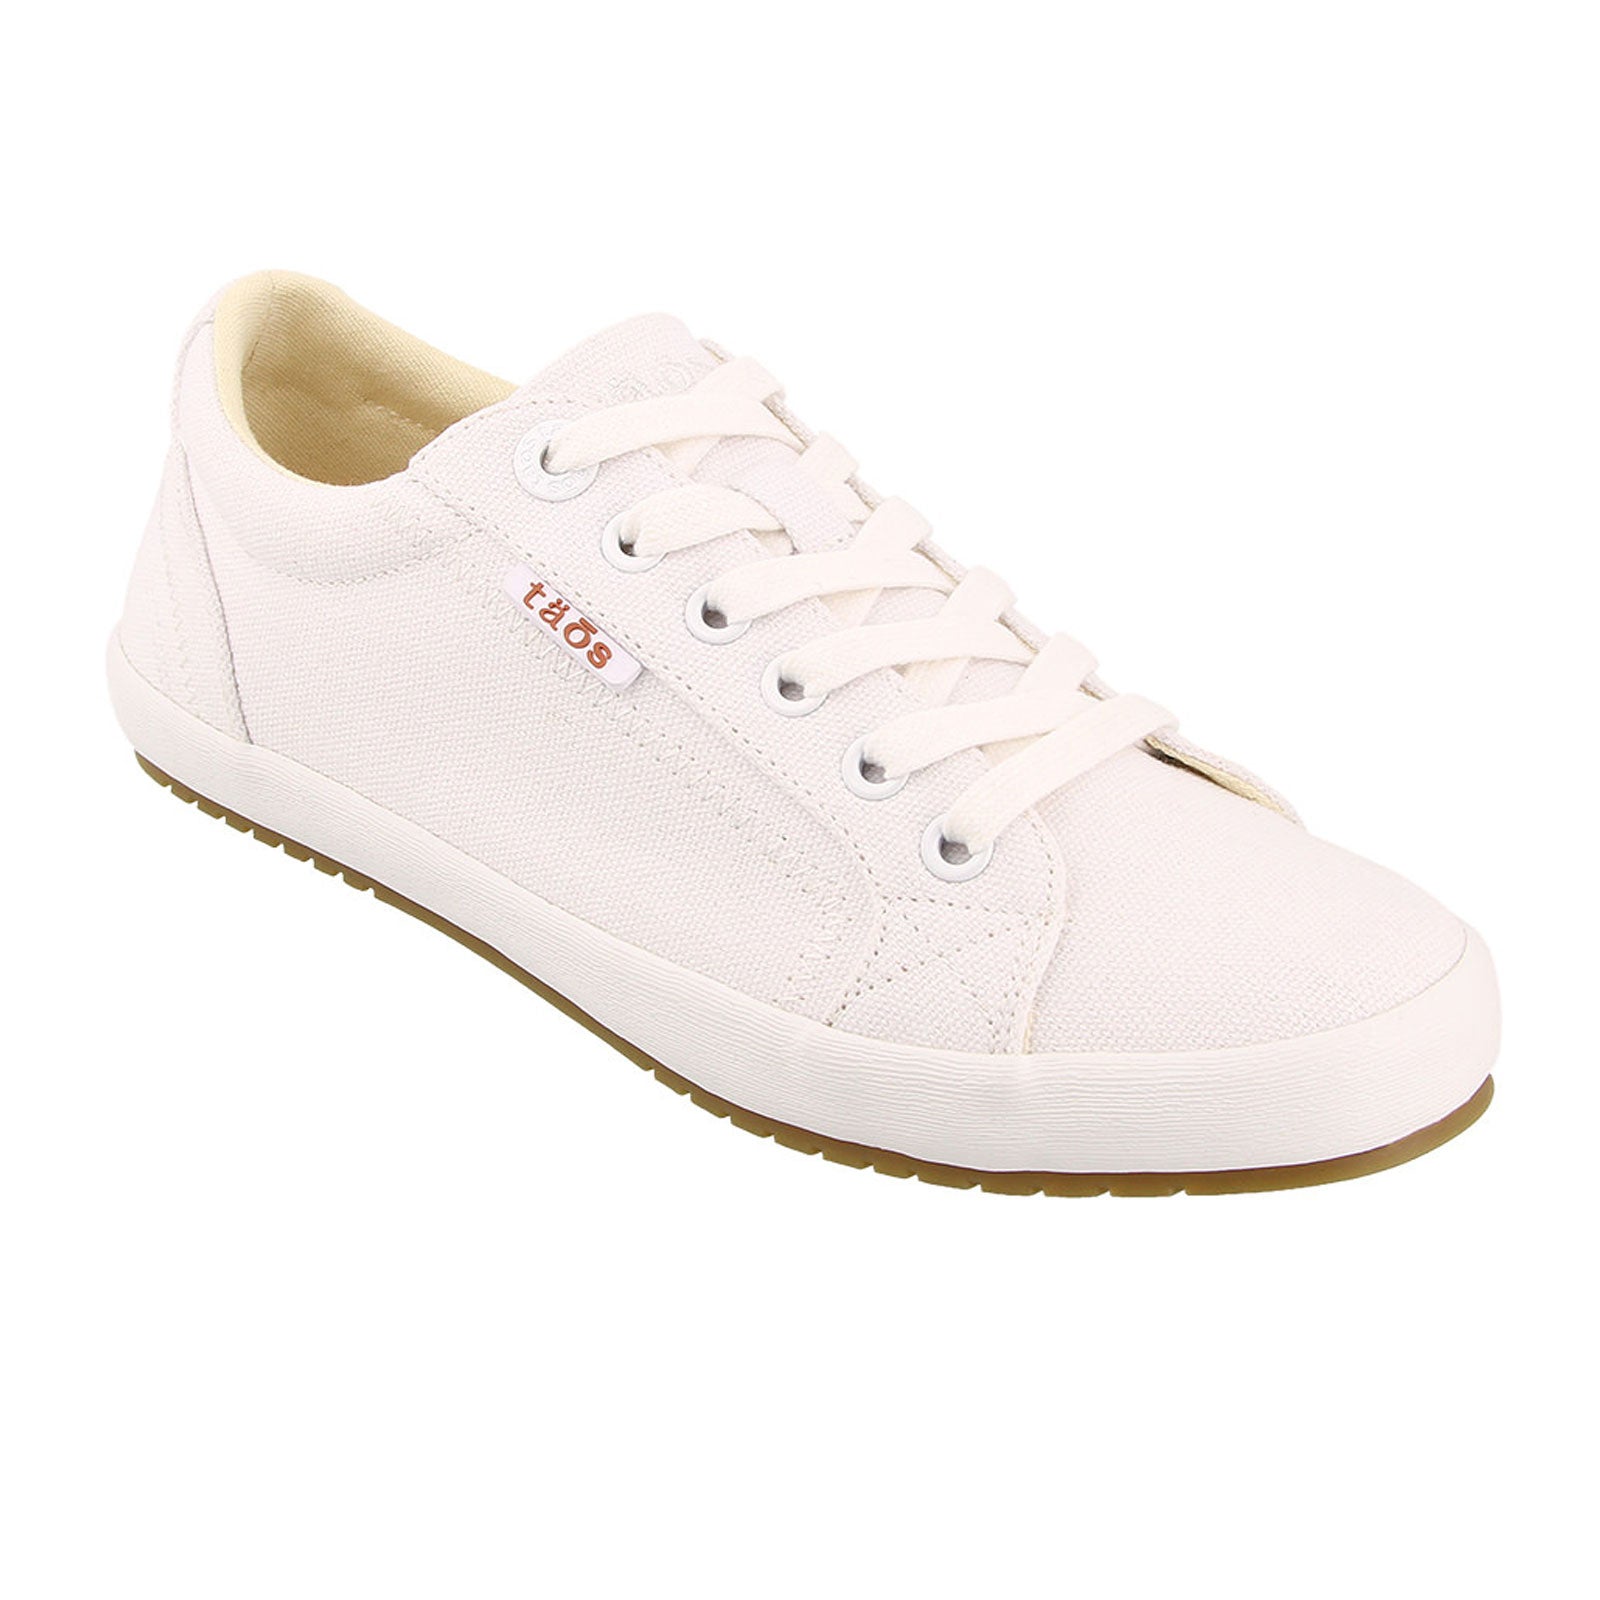 Taos Star Sneaker (Women) - White/White Dress-Casual - Sneakers - The Heel Shoe Fitters